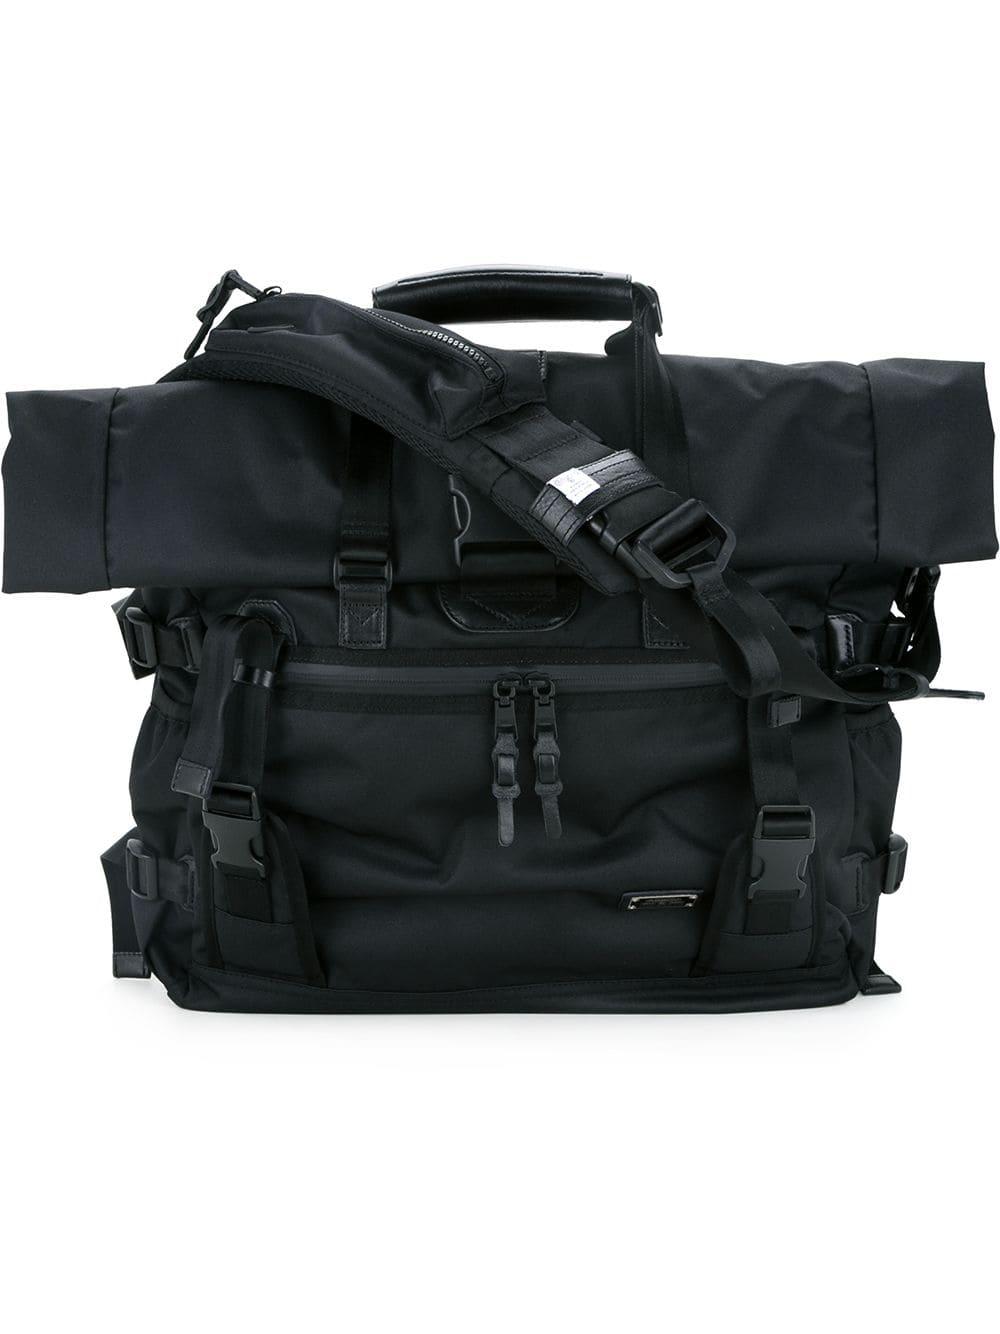 AS2OV Cordura Dobby 305d 2way Bag in Black for Men - Lyst